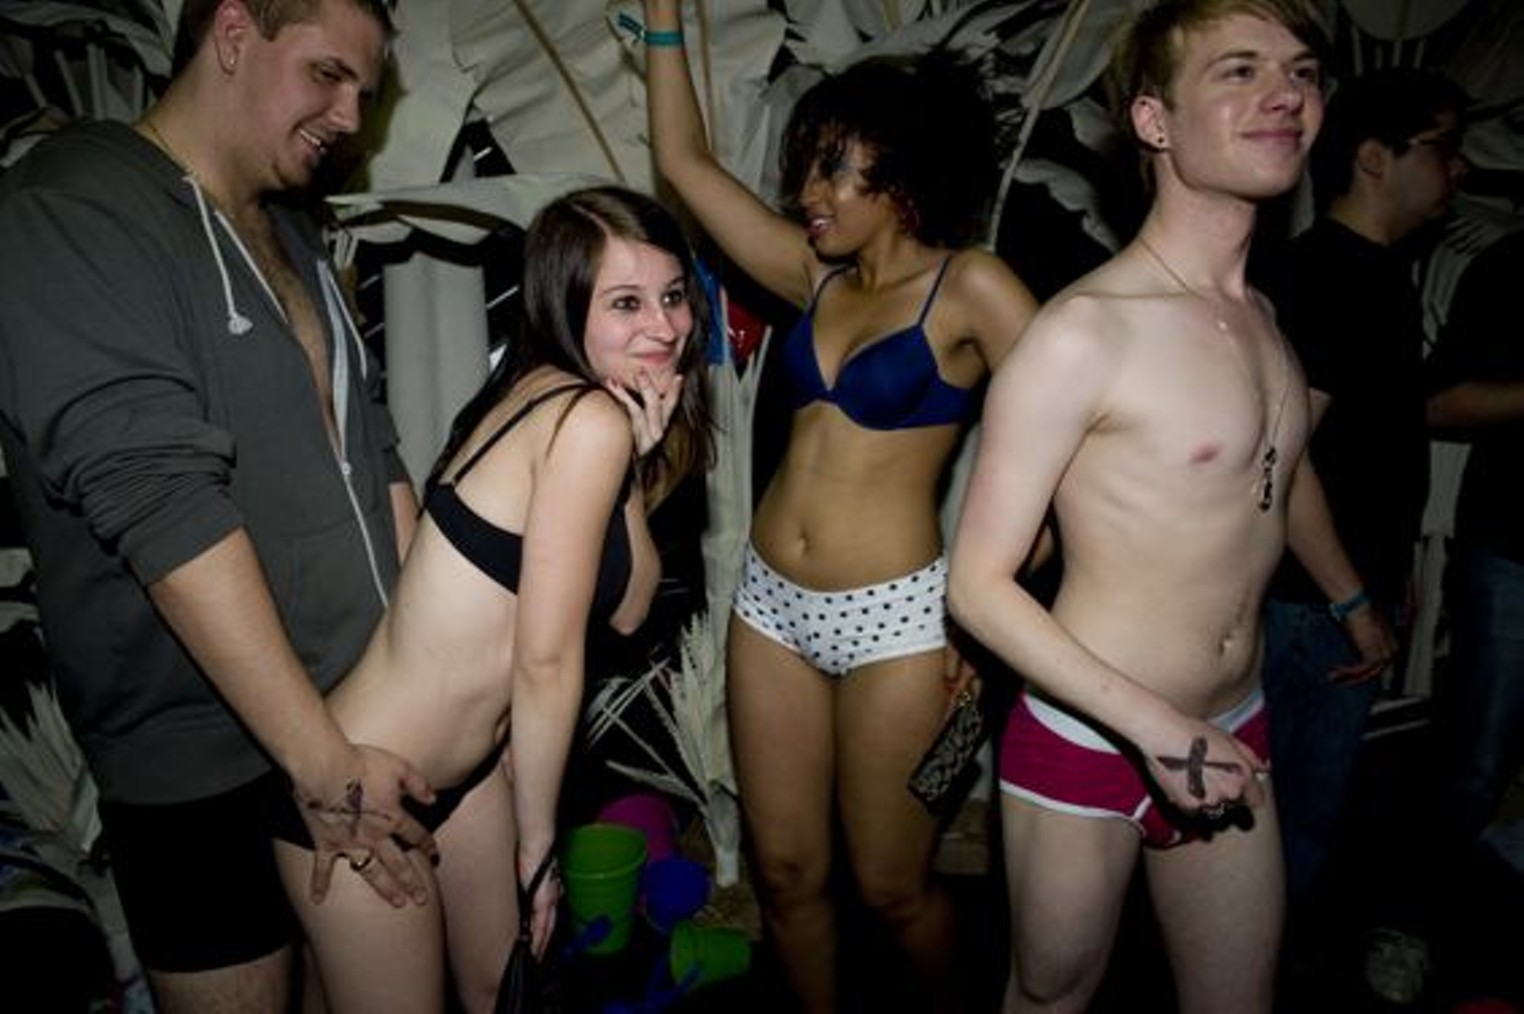 Underwear Party at Tracks (NSFW), Denver, Denver Westword